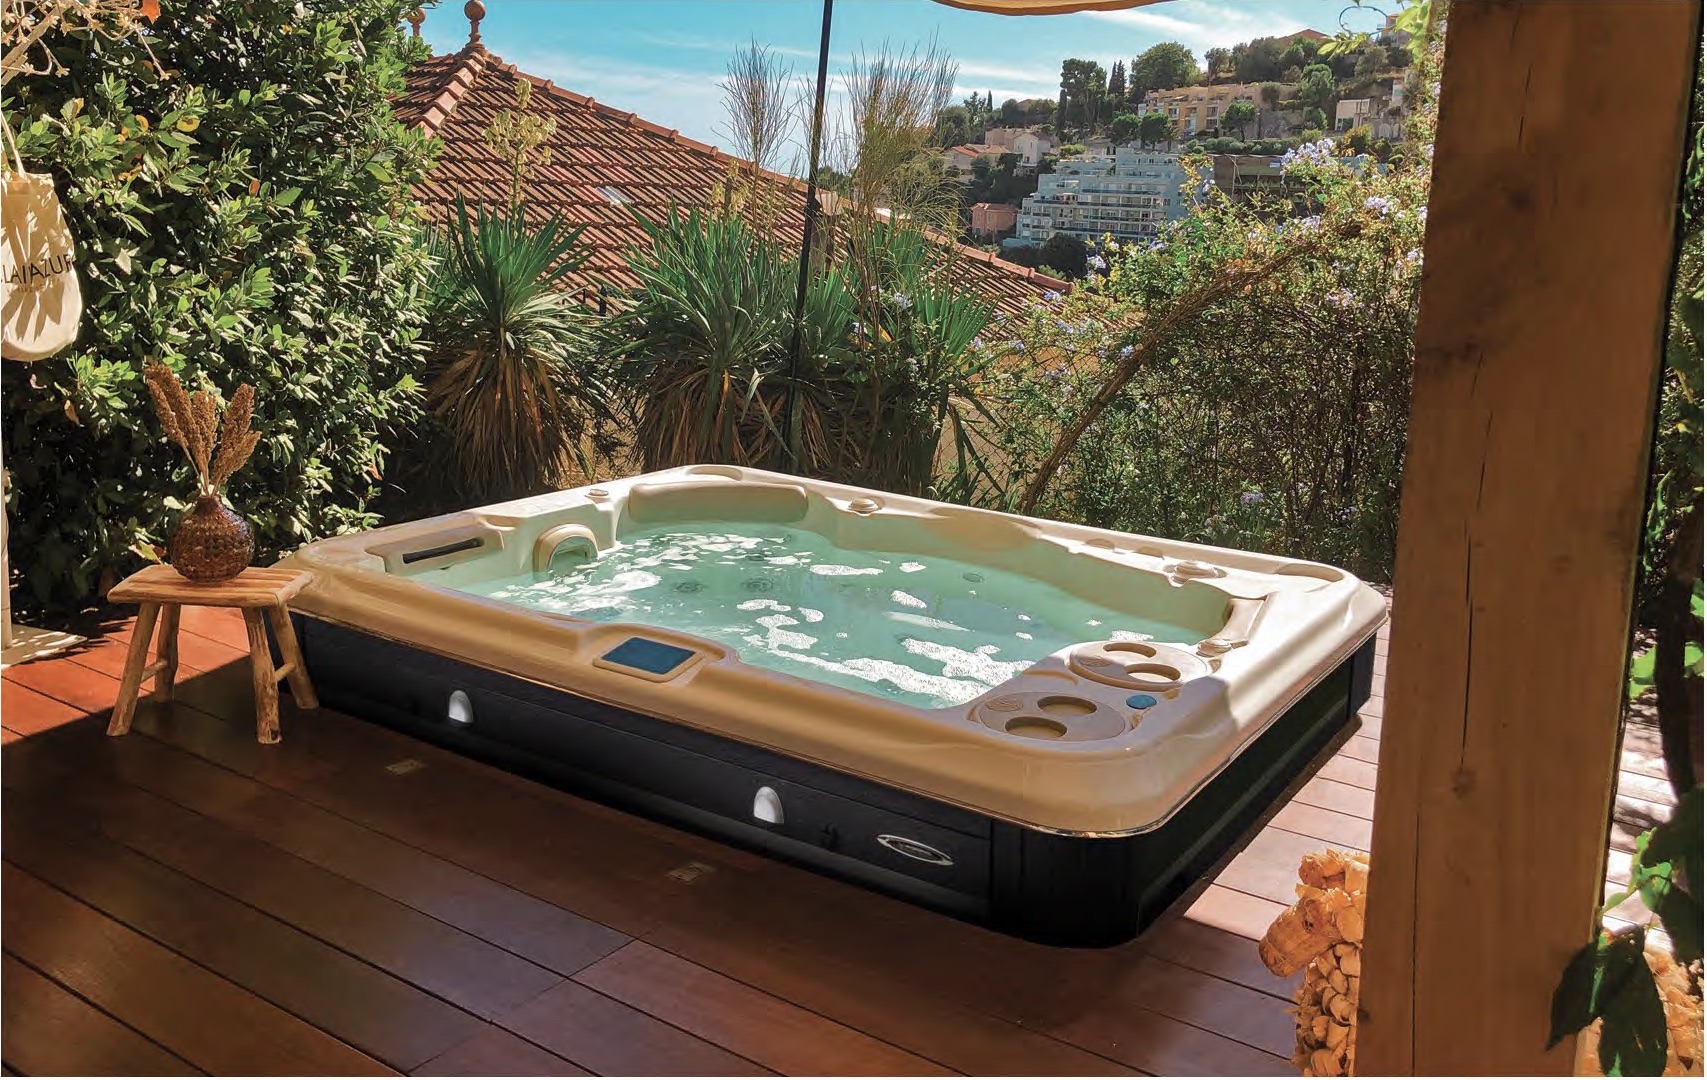 SIGNATURE HOT TUB MODEL 395 Install - Legacy Pool & Hot Tub